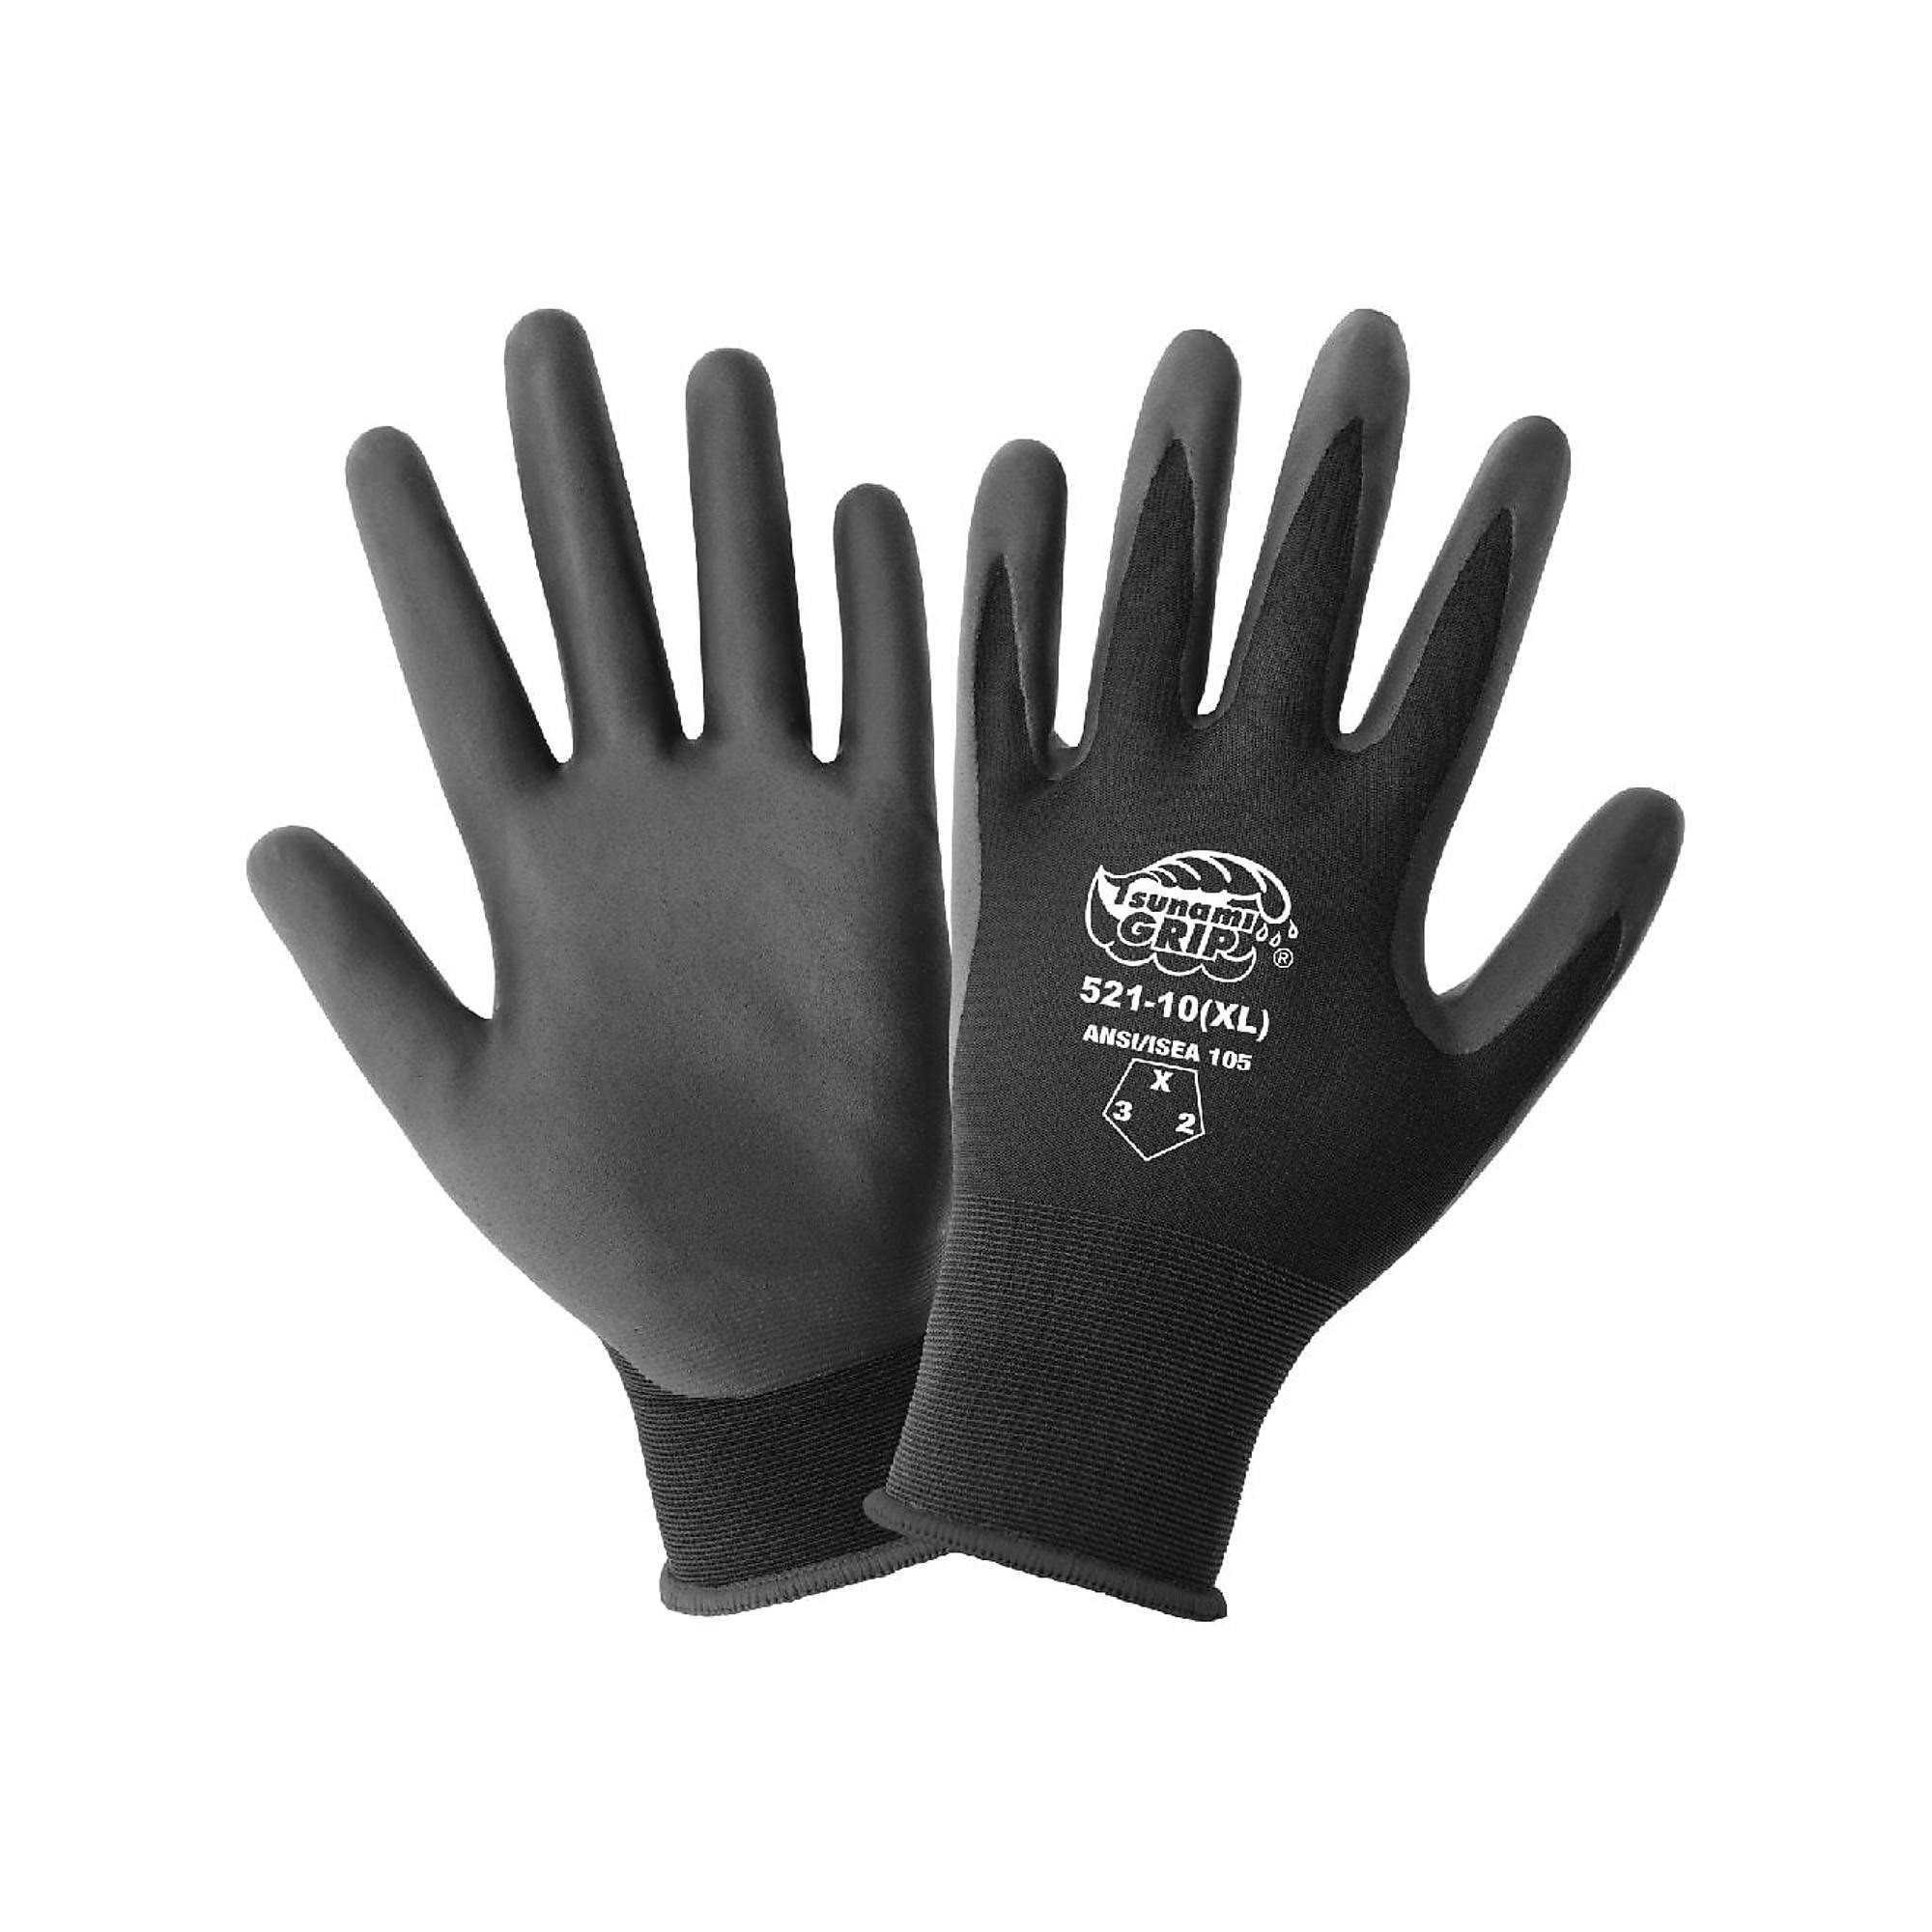 Global Glove Tsunami Grip , Tsunami Grip FDA Nitrile Coated 21-Gauge Gloves - 12 Pairs, Size L, Color Black, Included (qty.) 12 Model 521-9(L)